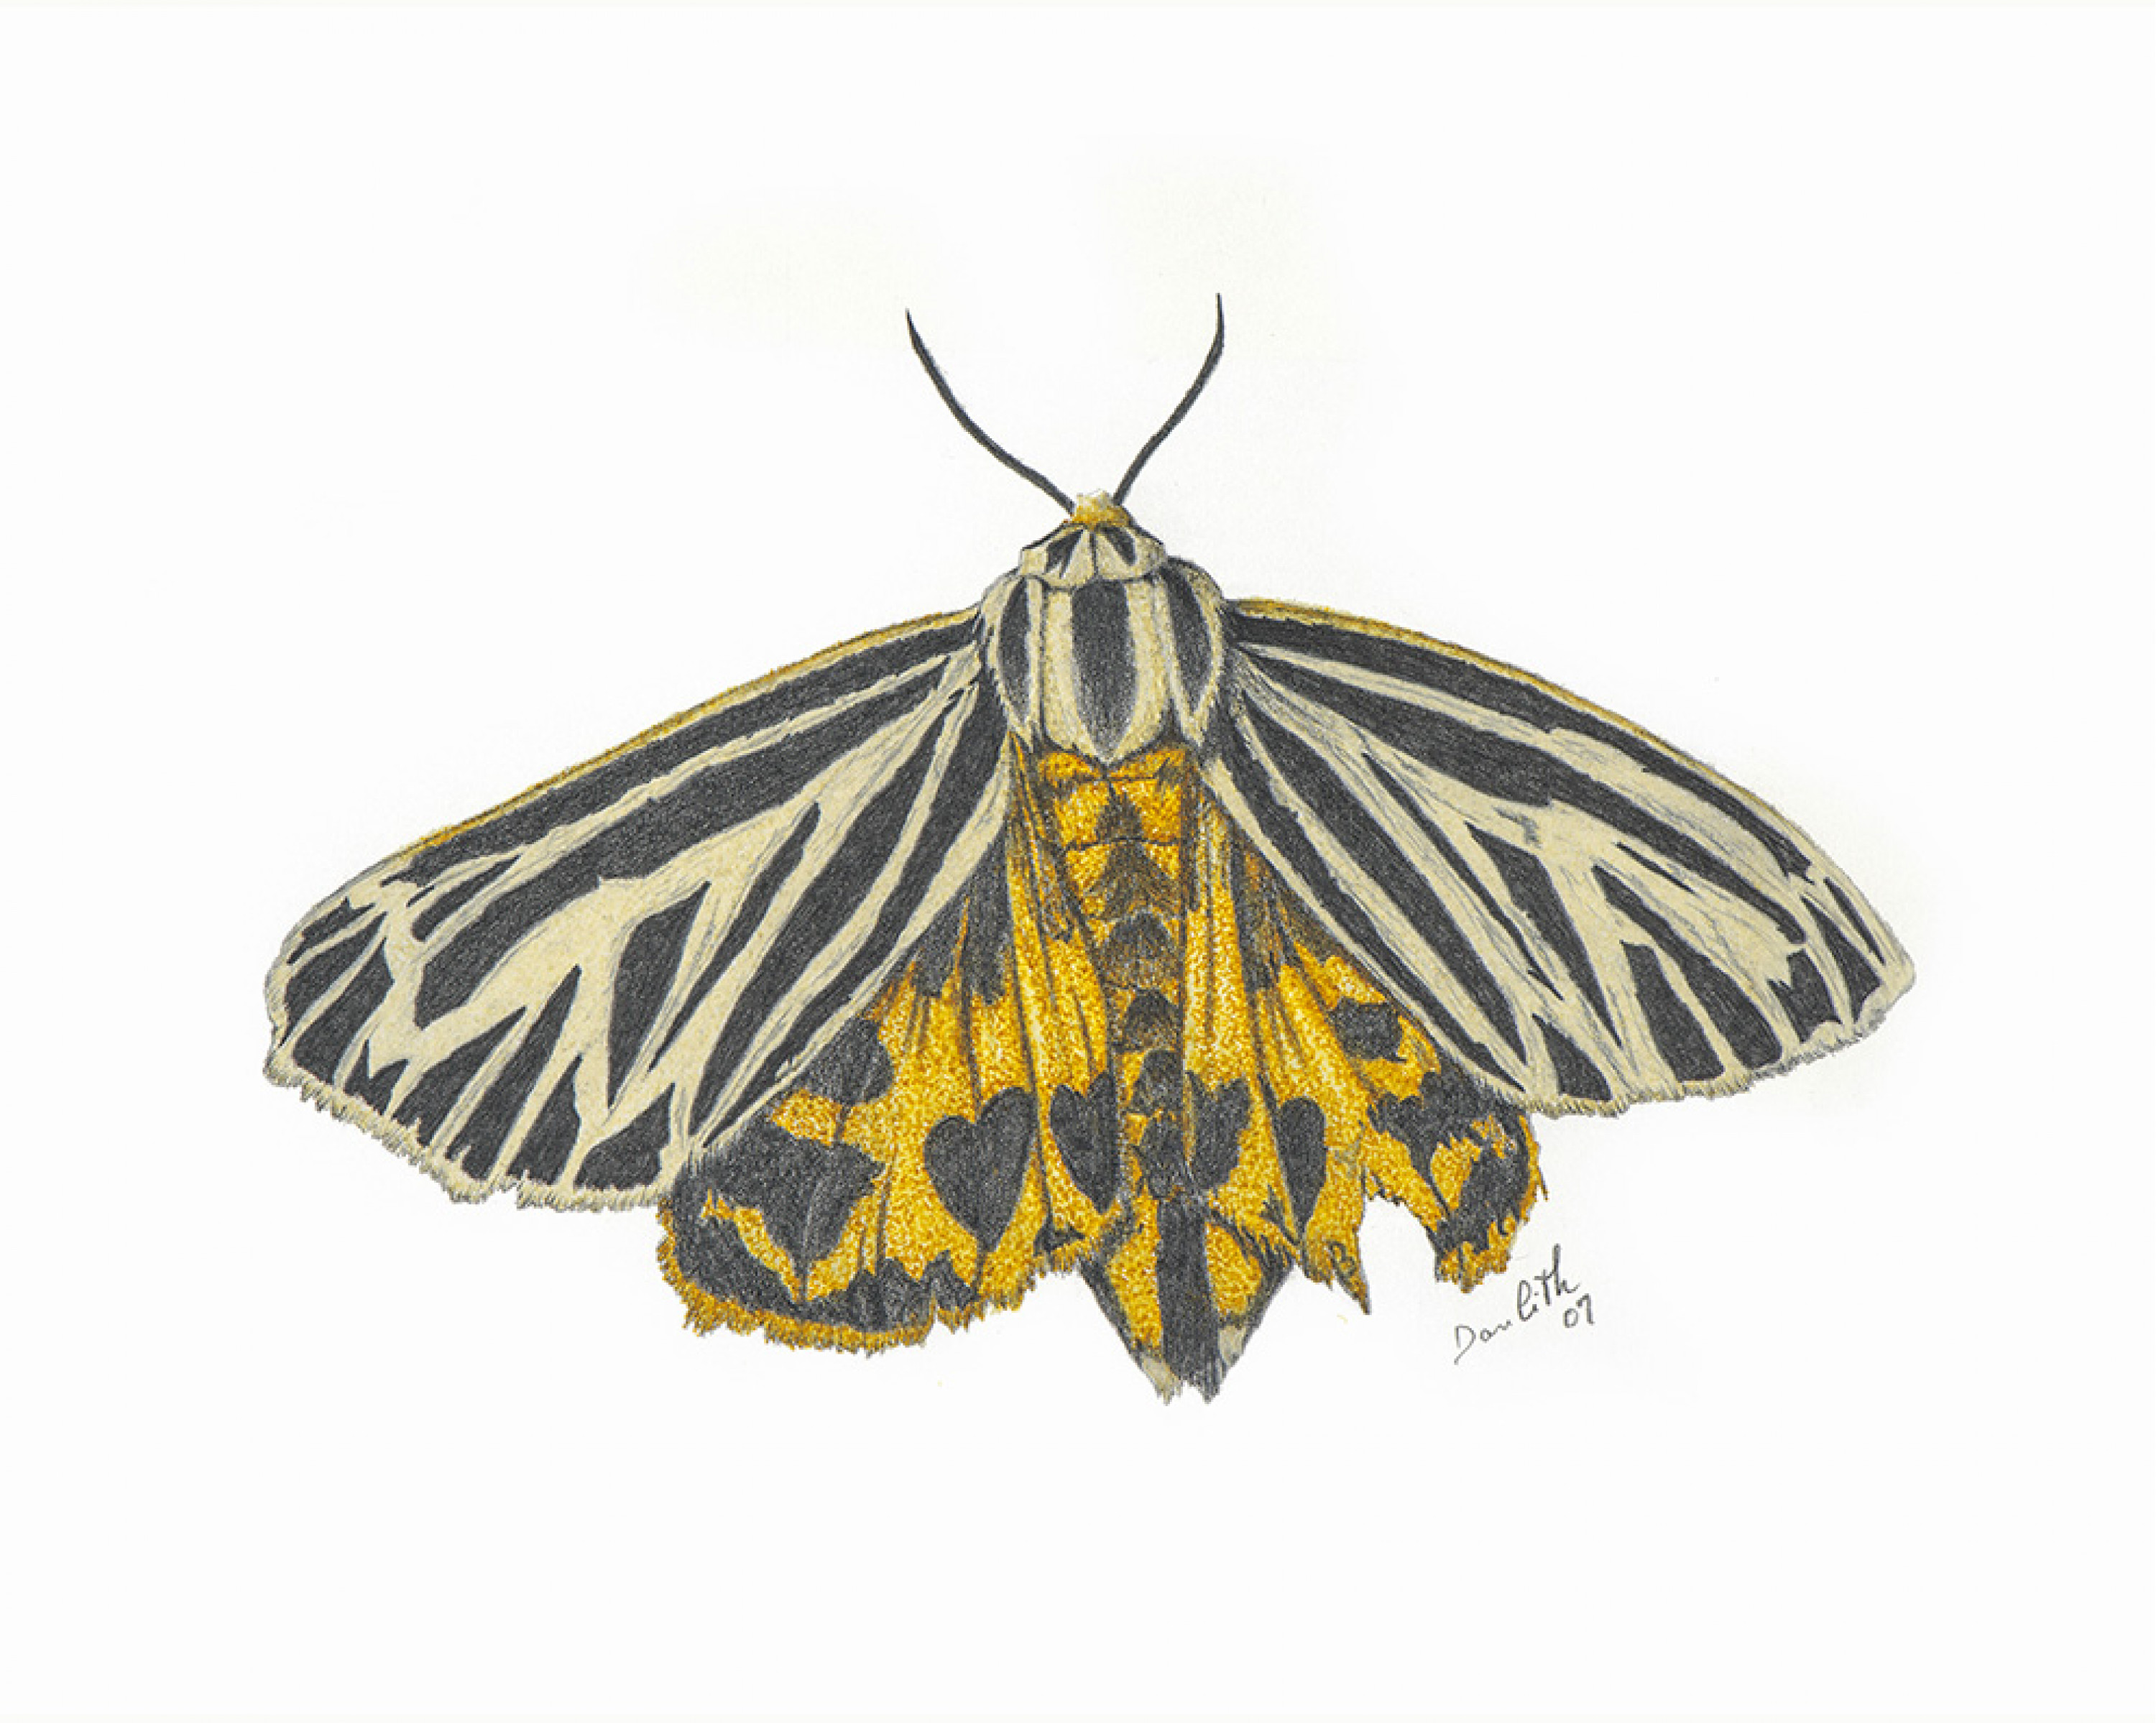 Apantèse vierge (Apantesis virgo): Virgin Tiger Moth 